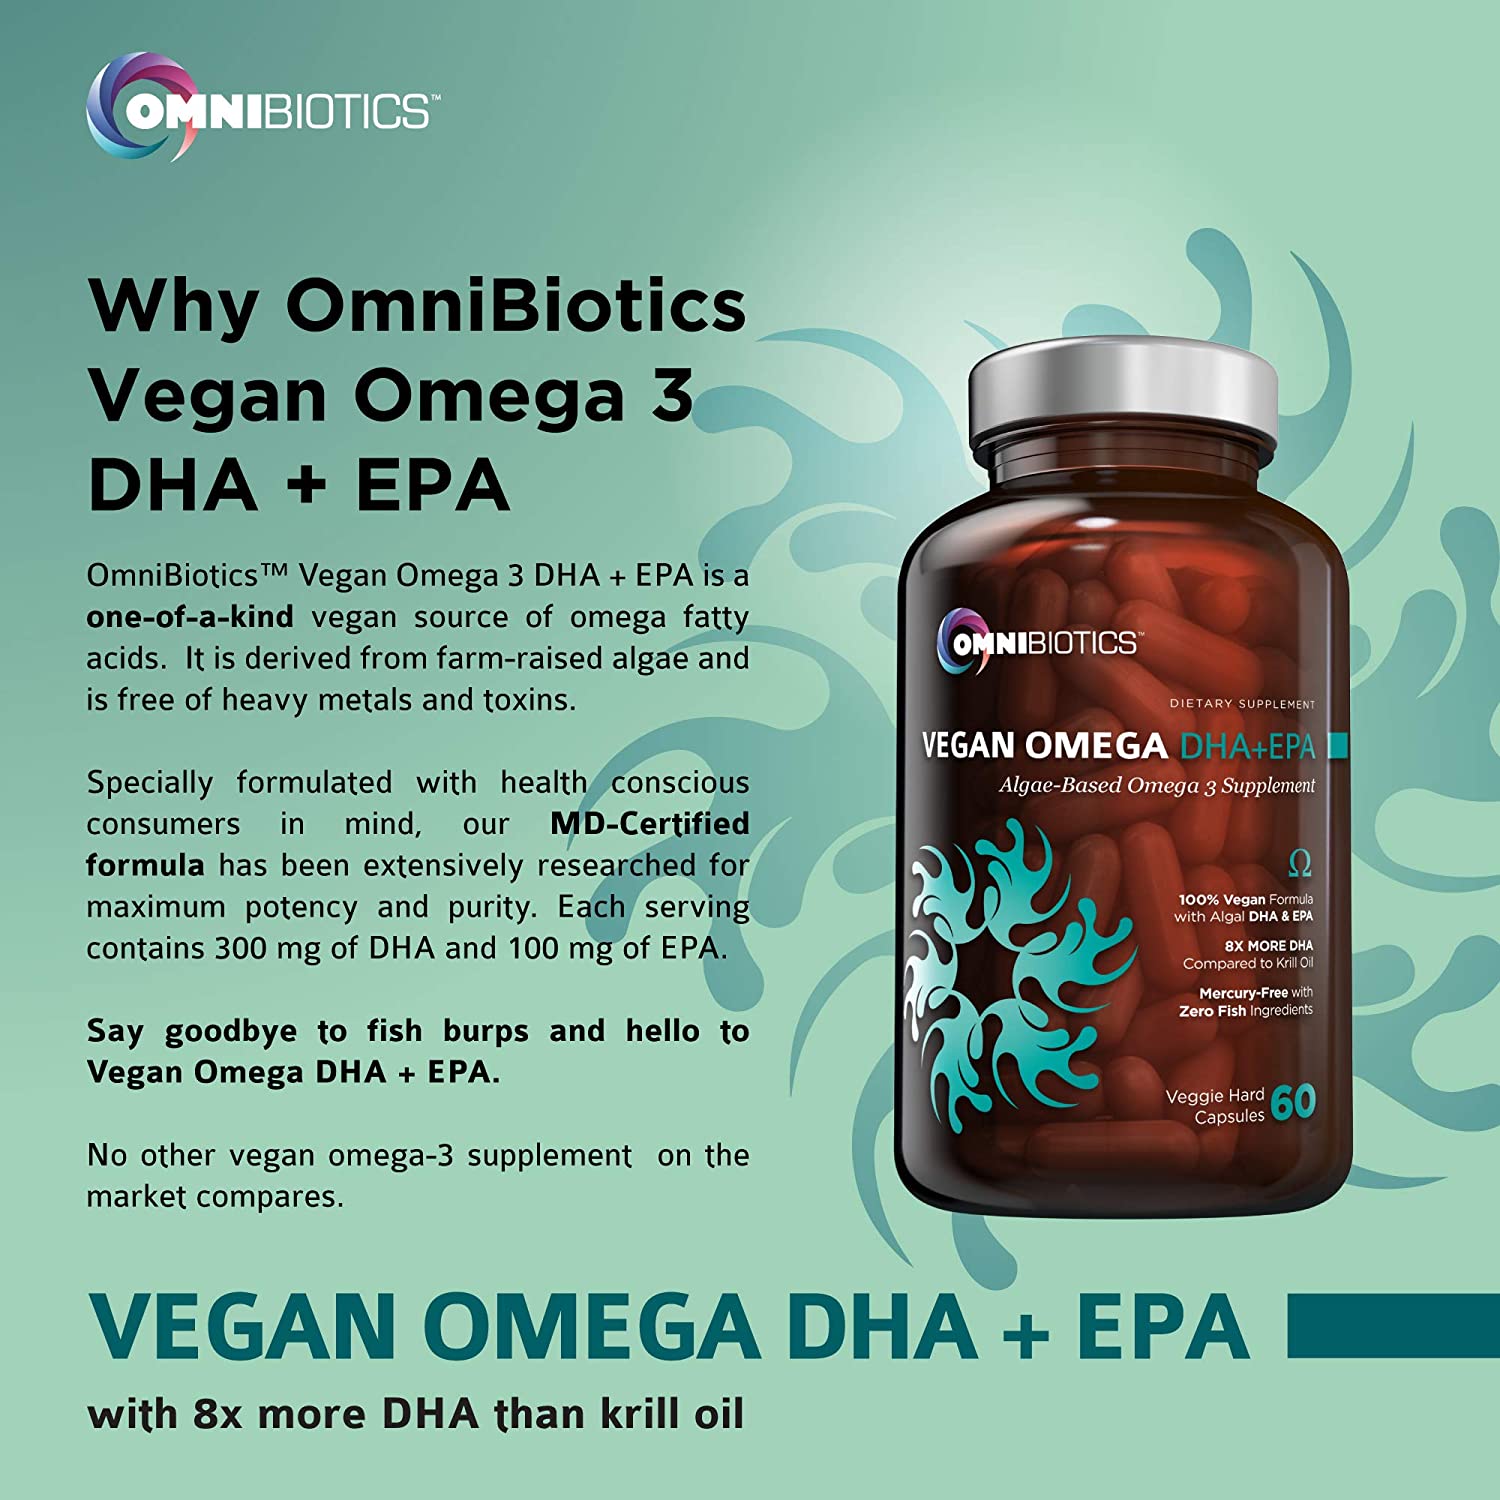 Vegan Omega 3 DHA + EPA